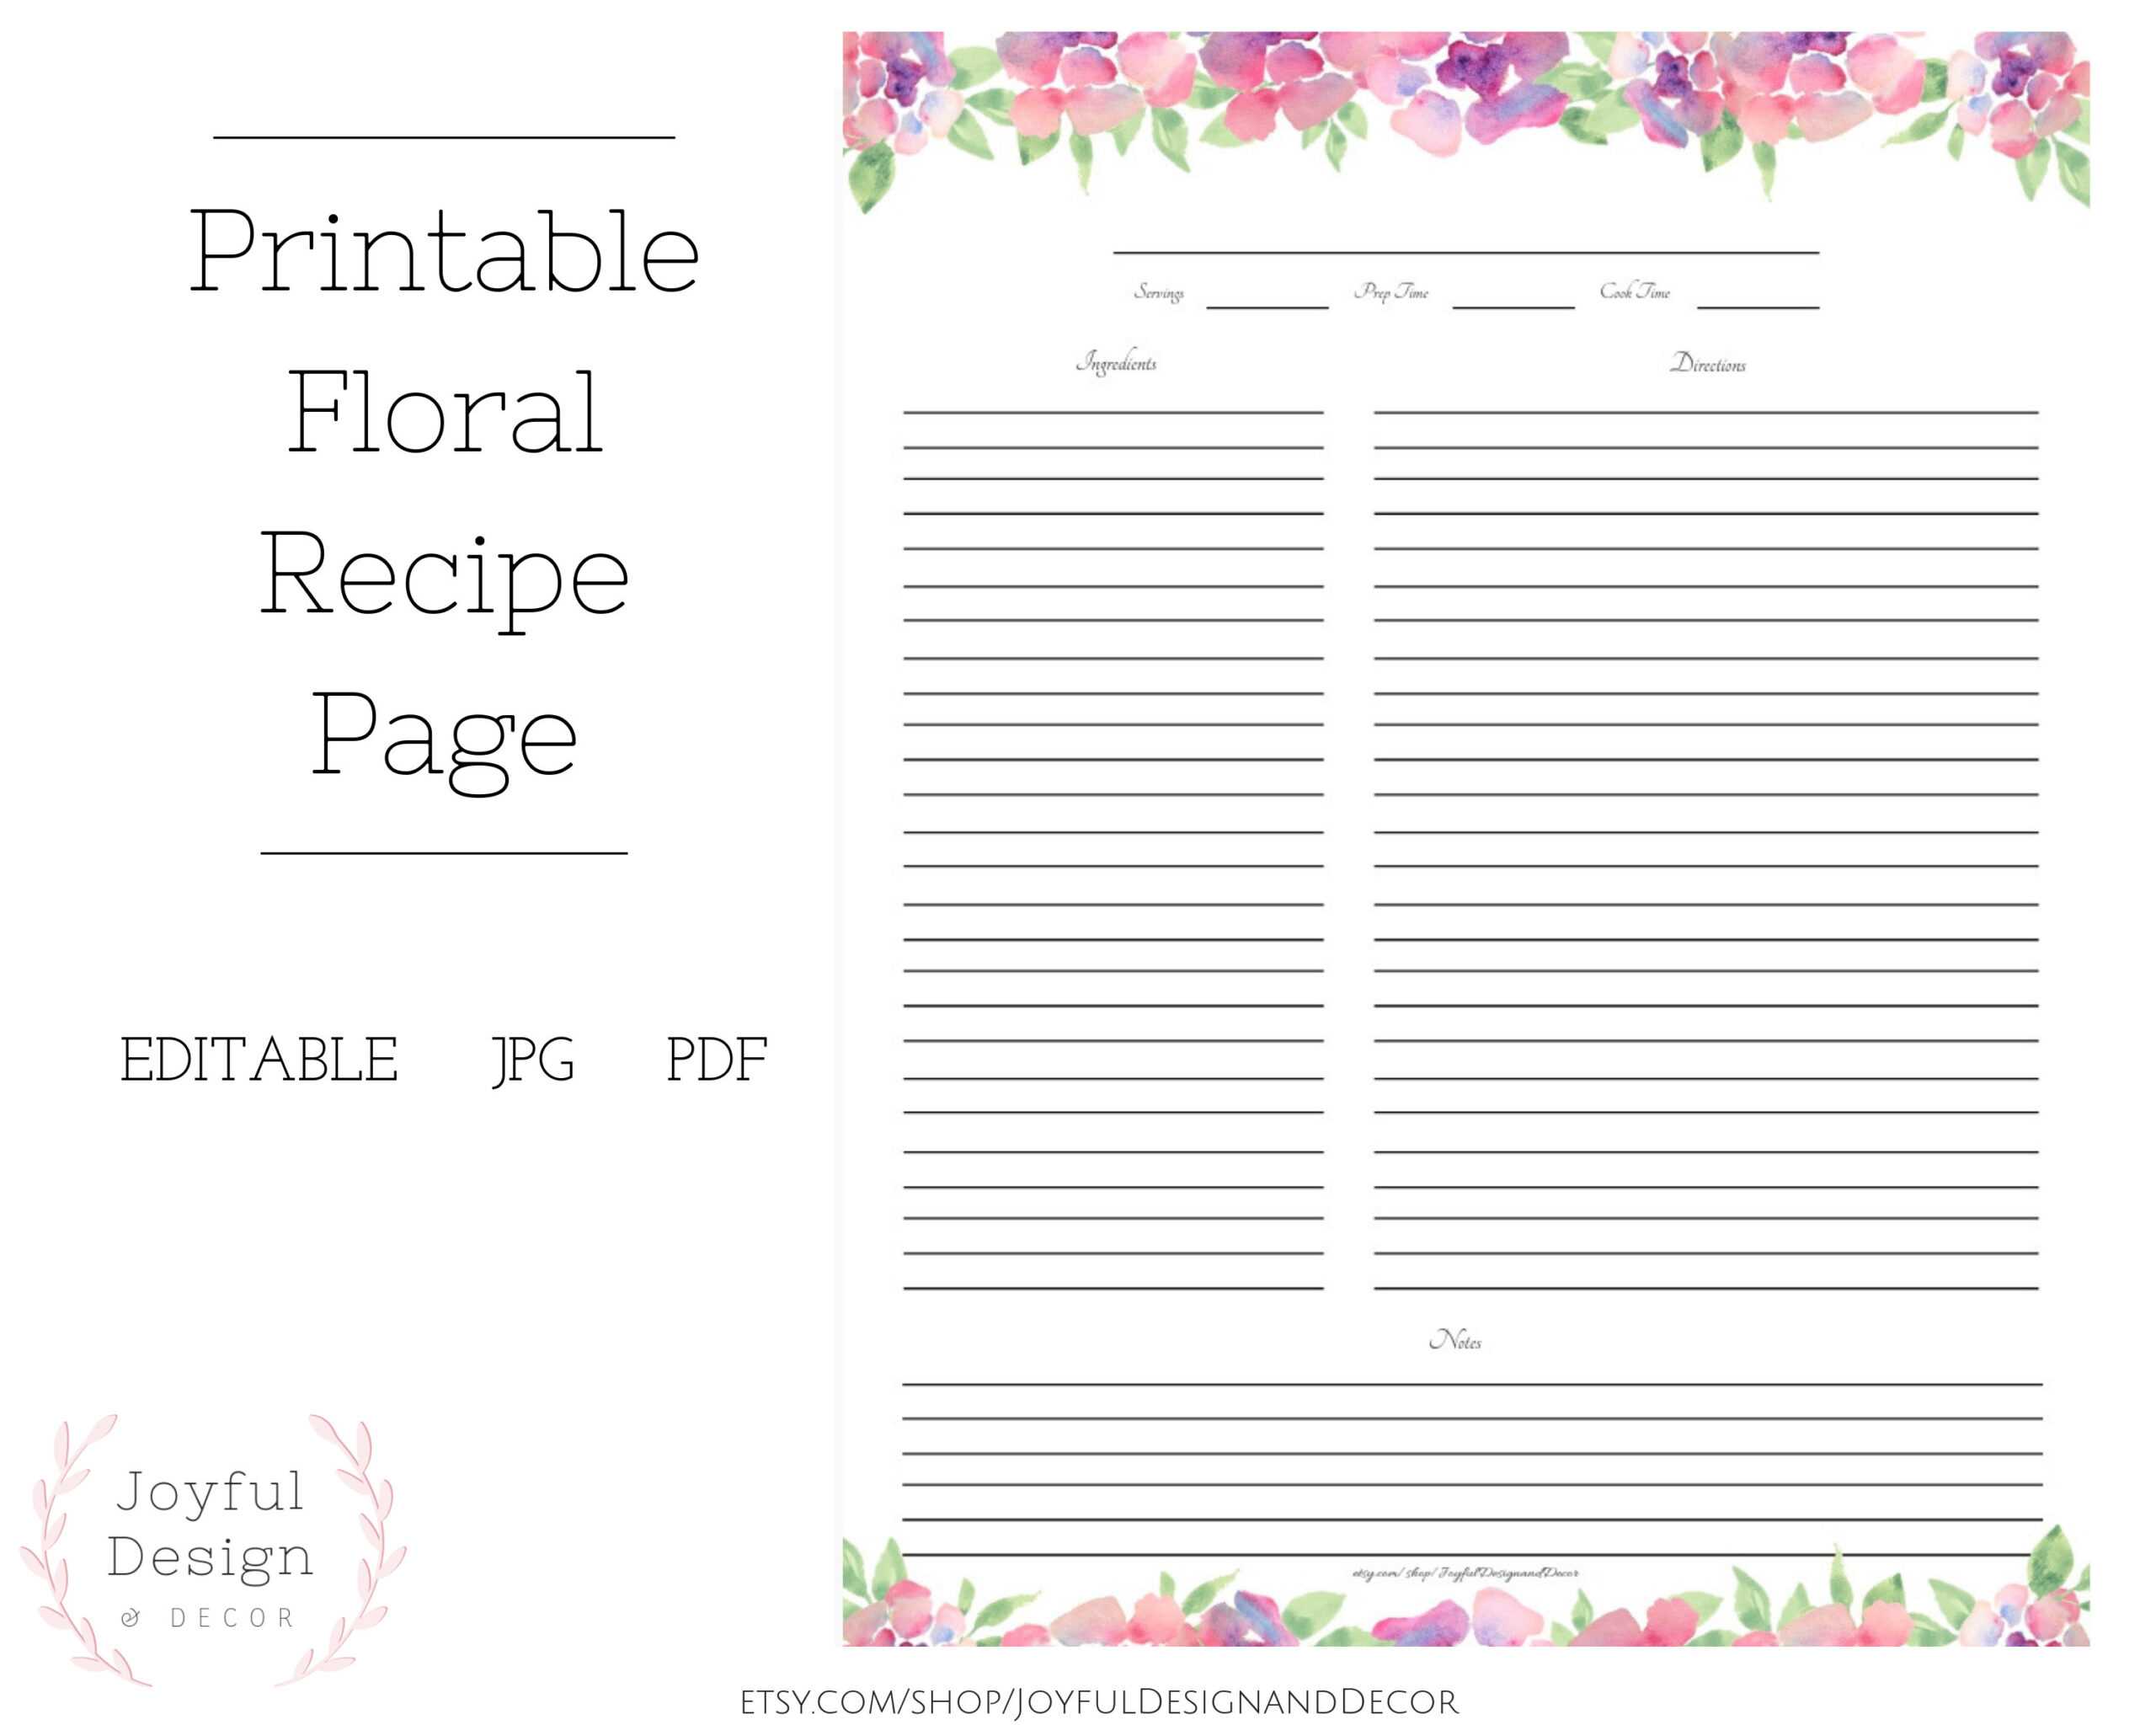 Fillable Recipe Page Floral Recipe Page Blank Recipe Template Recipe  Organization Recipe Storage Ideas Full Page Recipe Card Recipe Cards Regarding Fillable Recipe Card Template